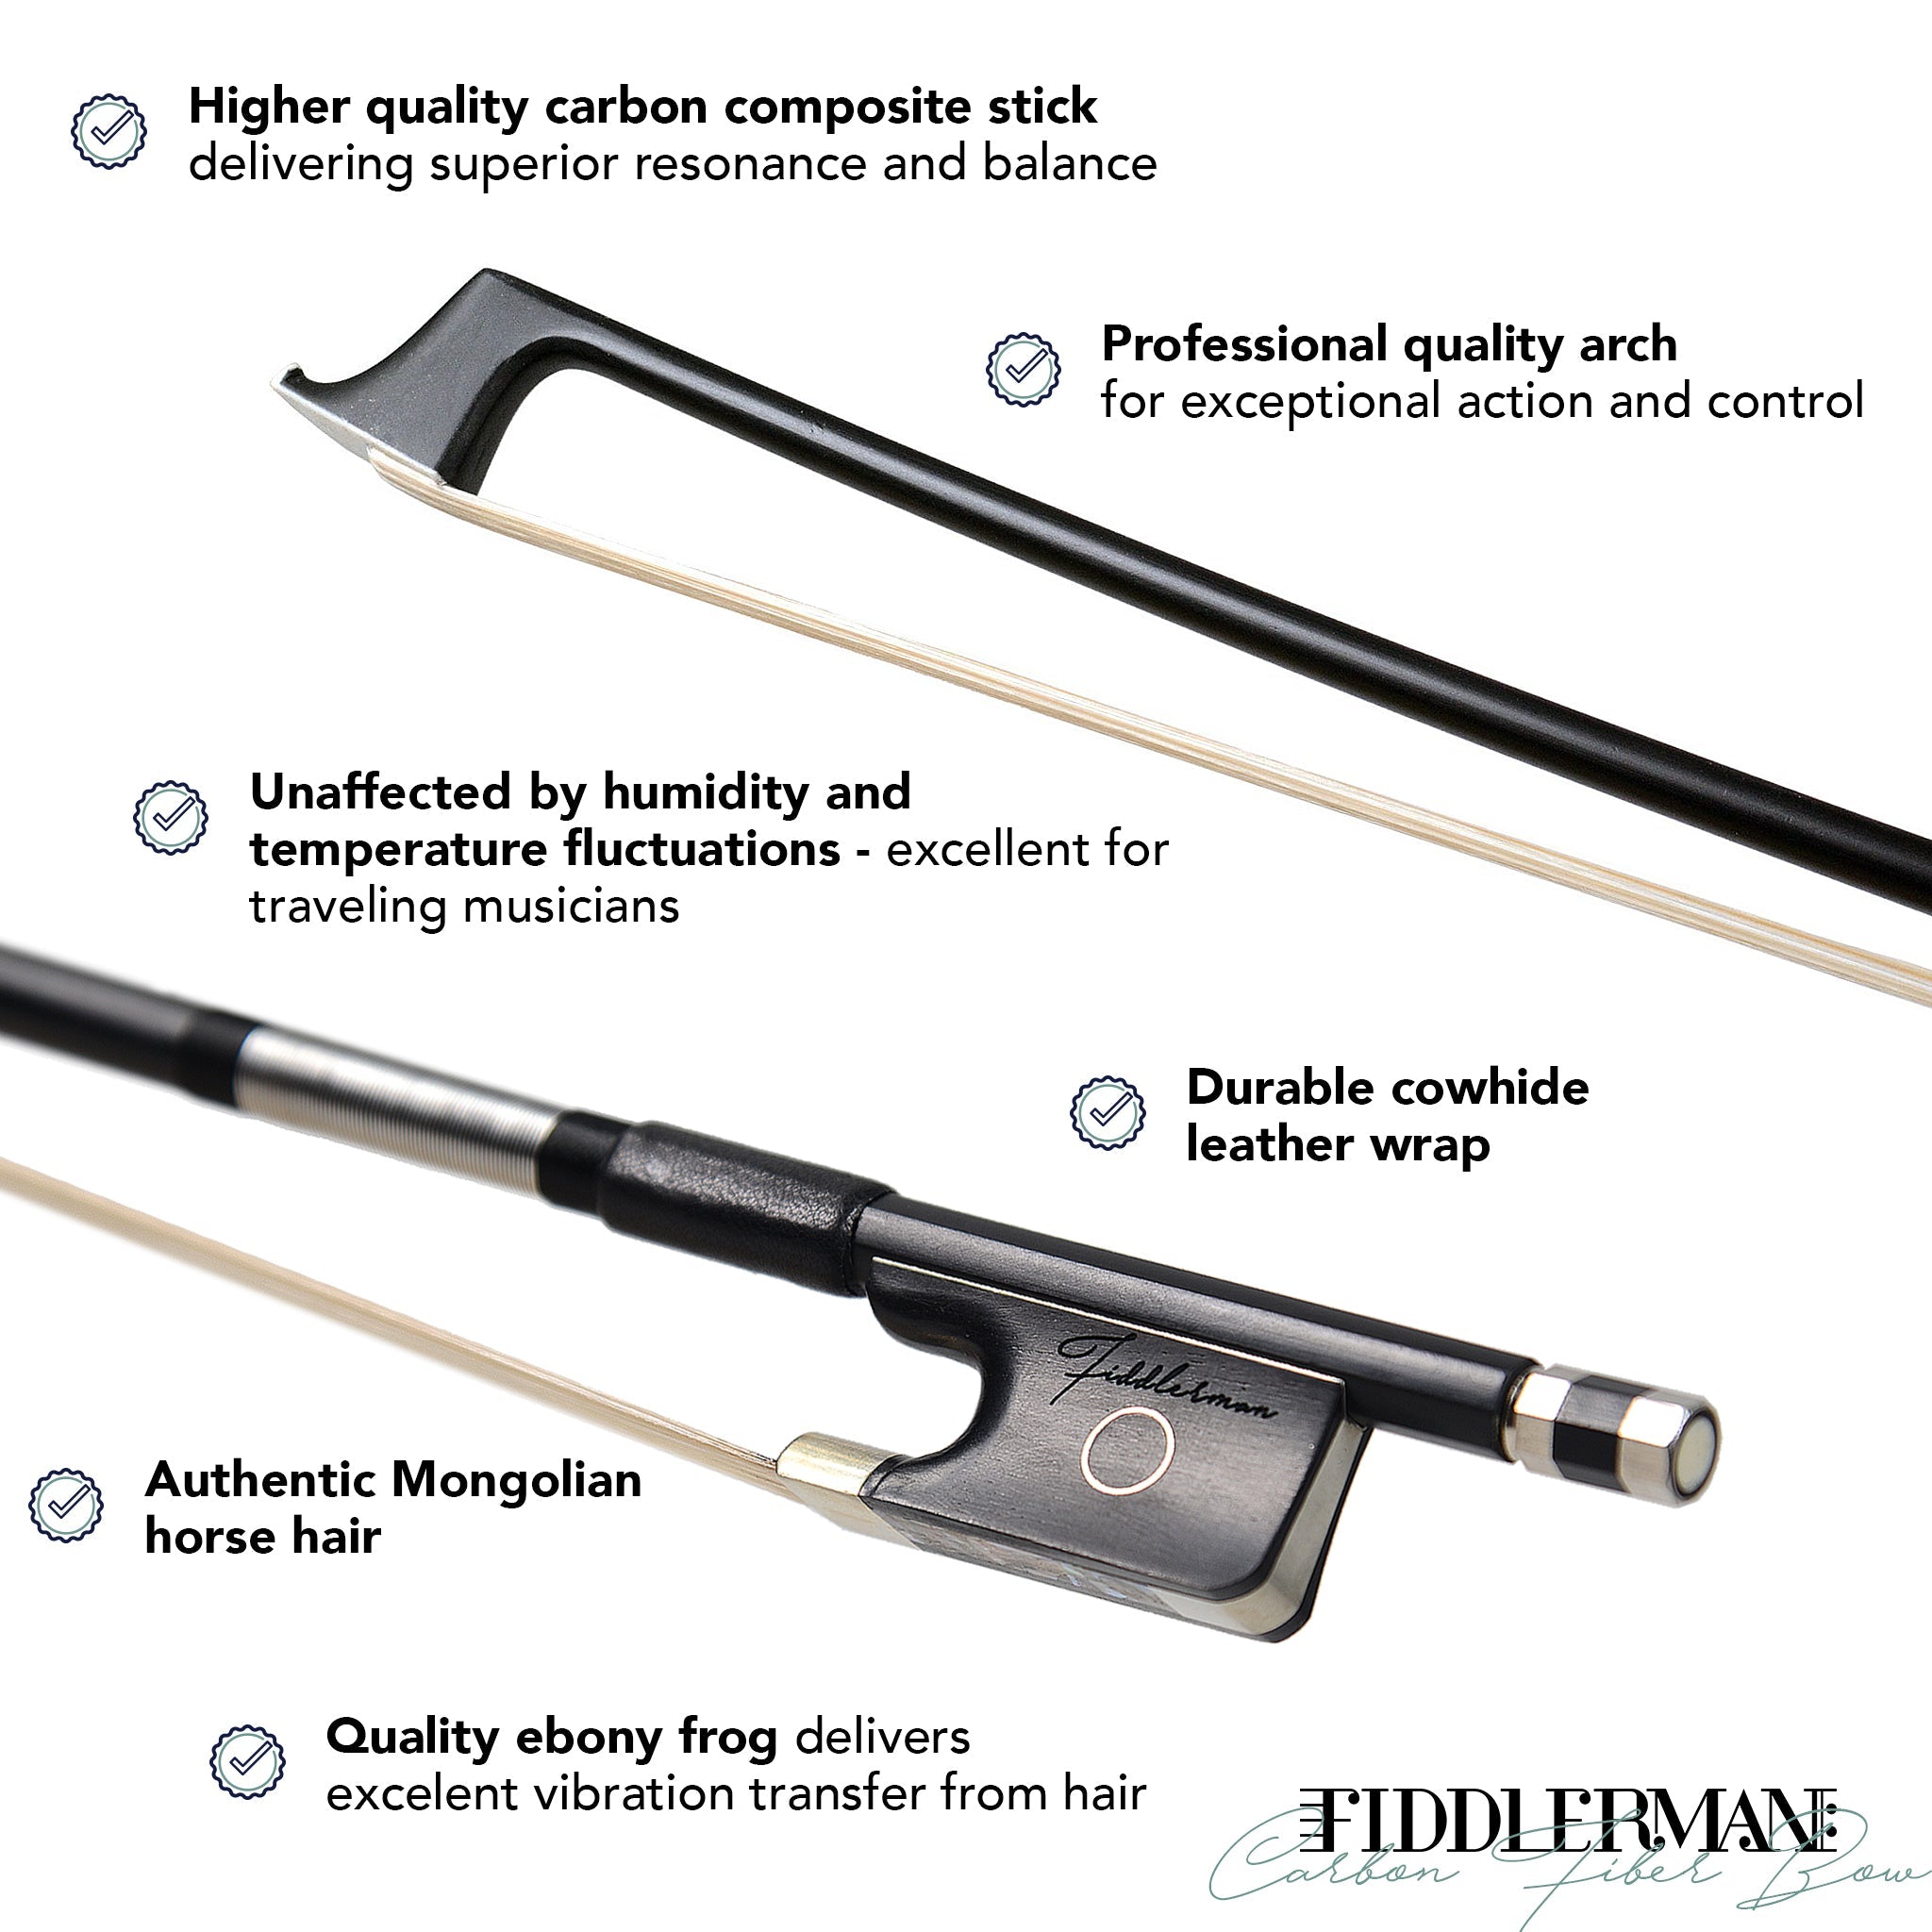 B-Stock Fiddlerman Carbon Fiber Viola Bow